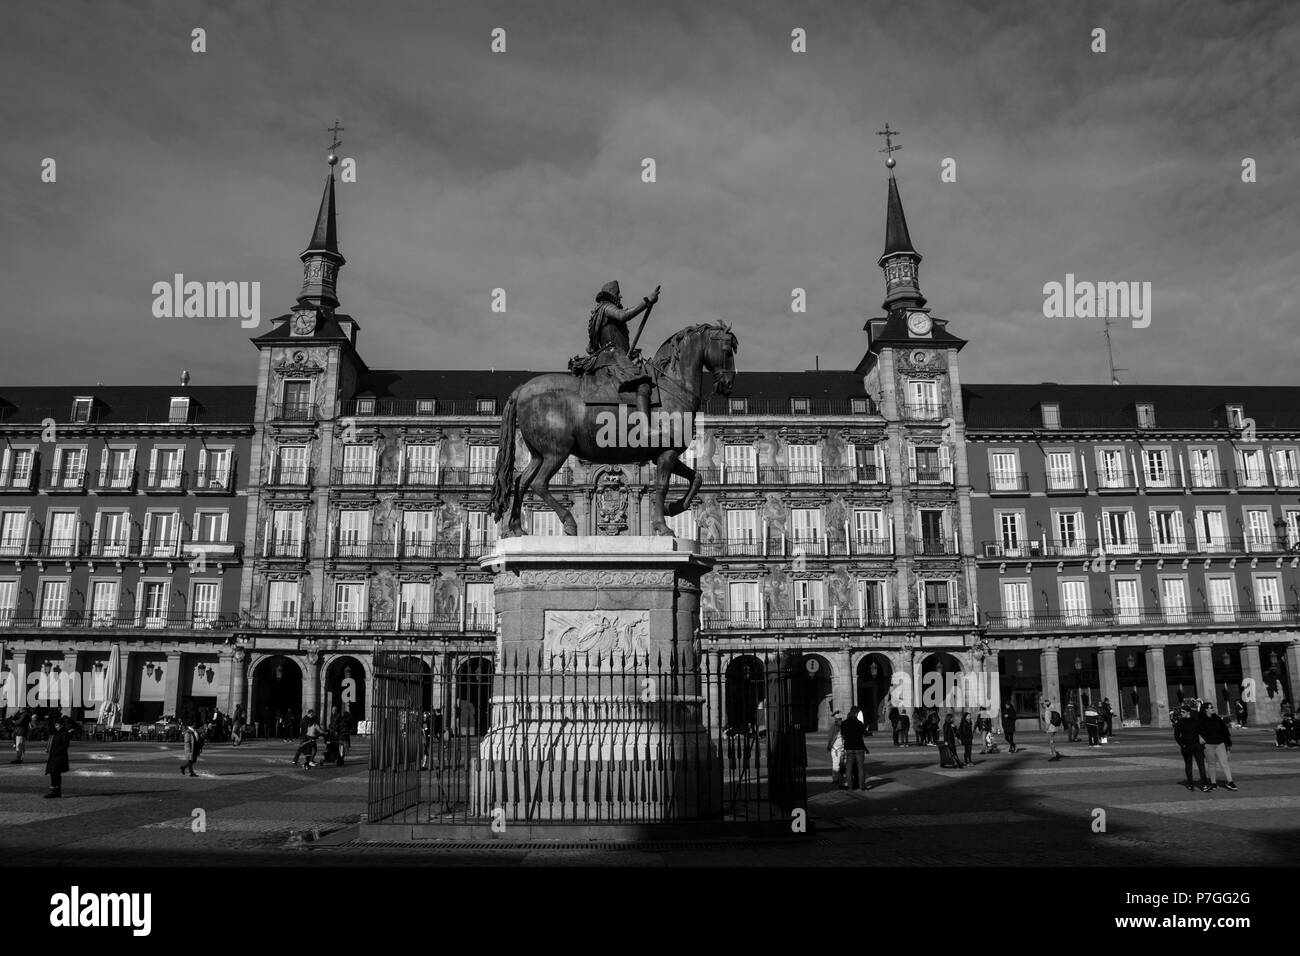 Madrid Black and White Stock Photos & Images - Alamy